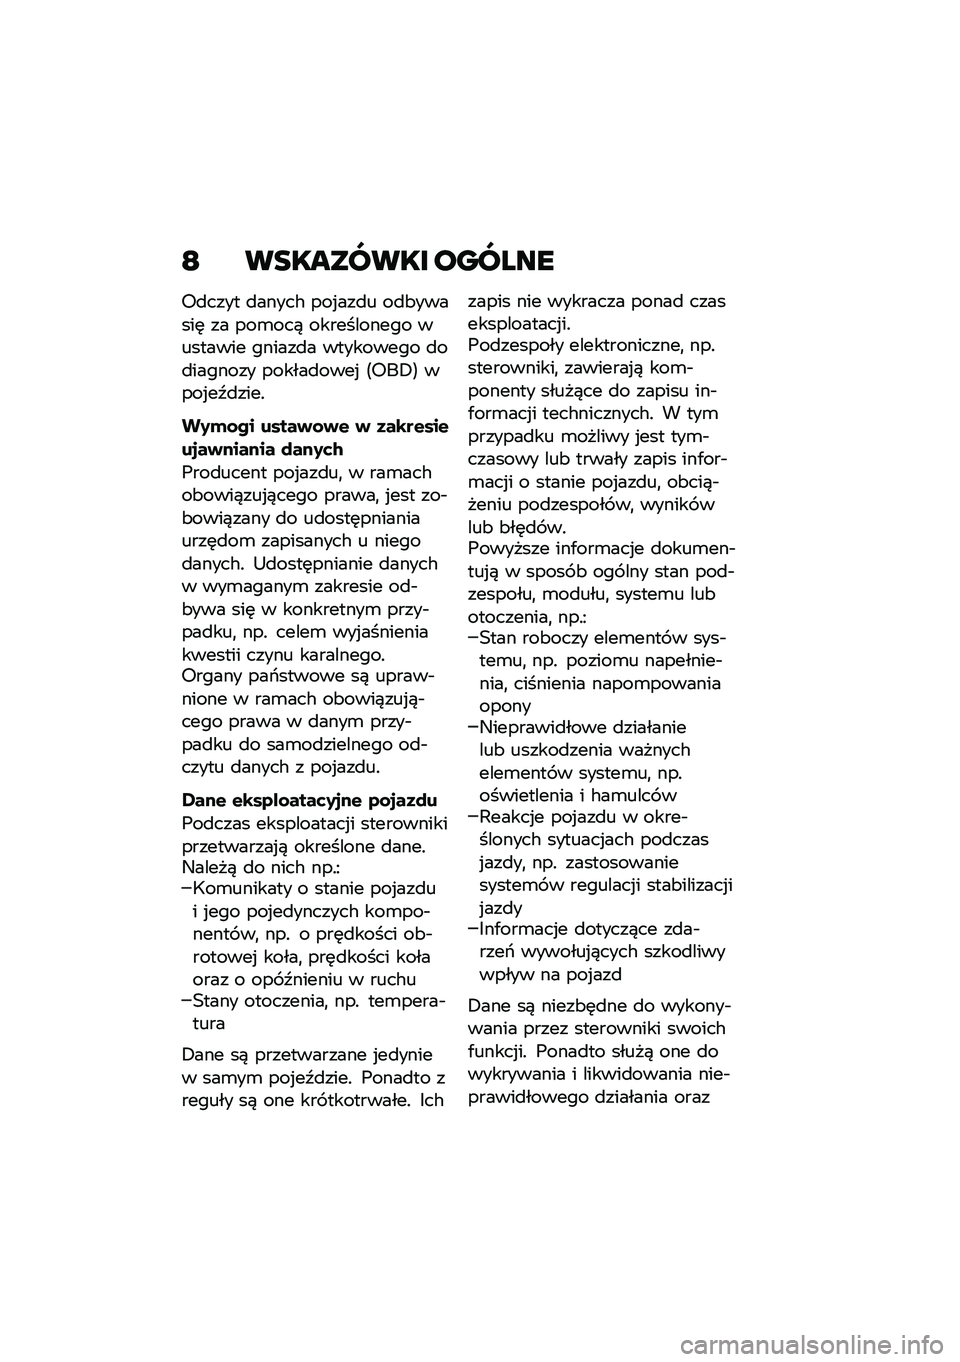 BMW MOTORRAD C 400 GT 2020  Instrukcja obsługi (in Polish) �E ��������� ������
�;�
���� �
�����# ���%���
� ��
�&������	 �� ���\b���) ����������� �������� ������
� ��������� �
��
���